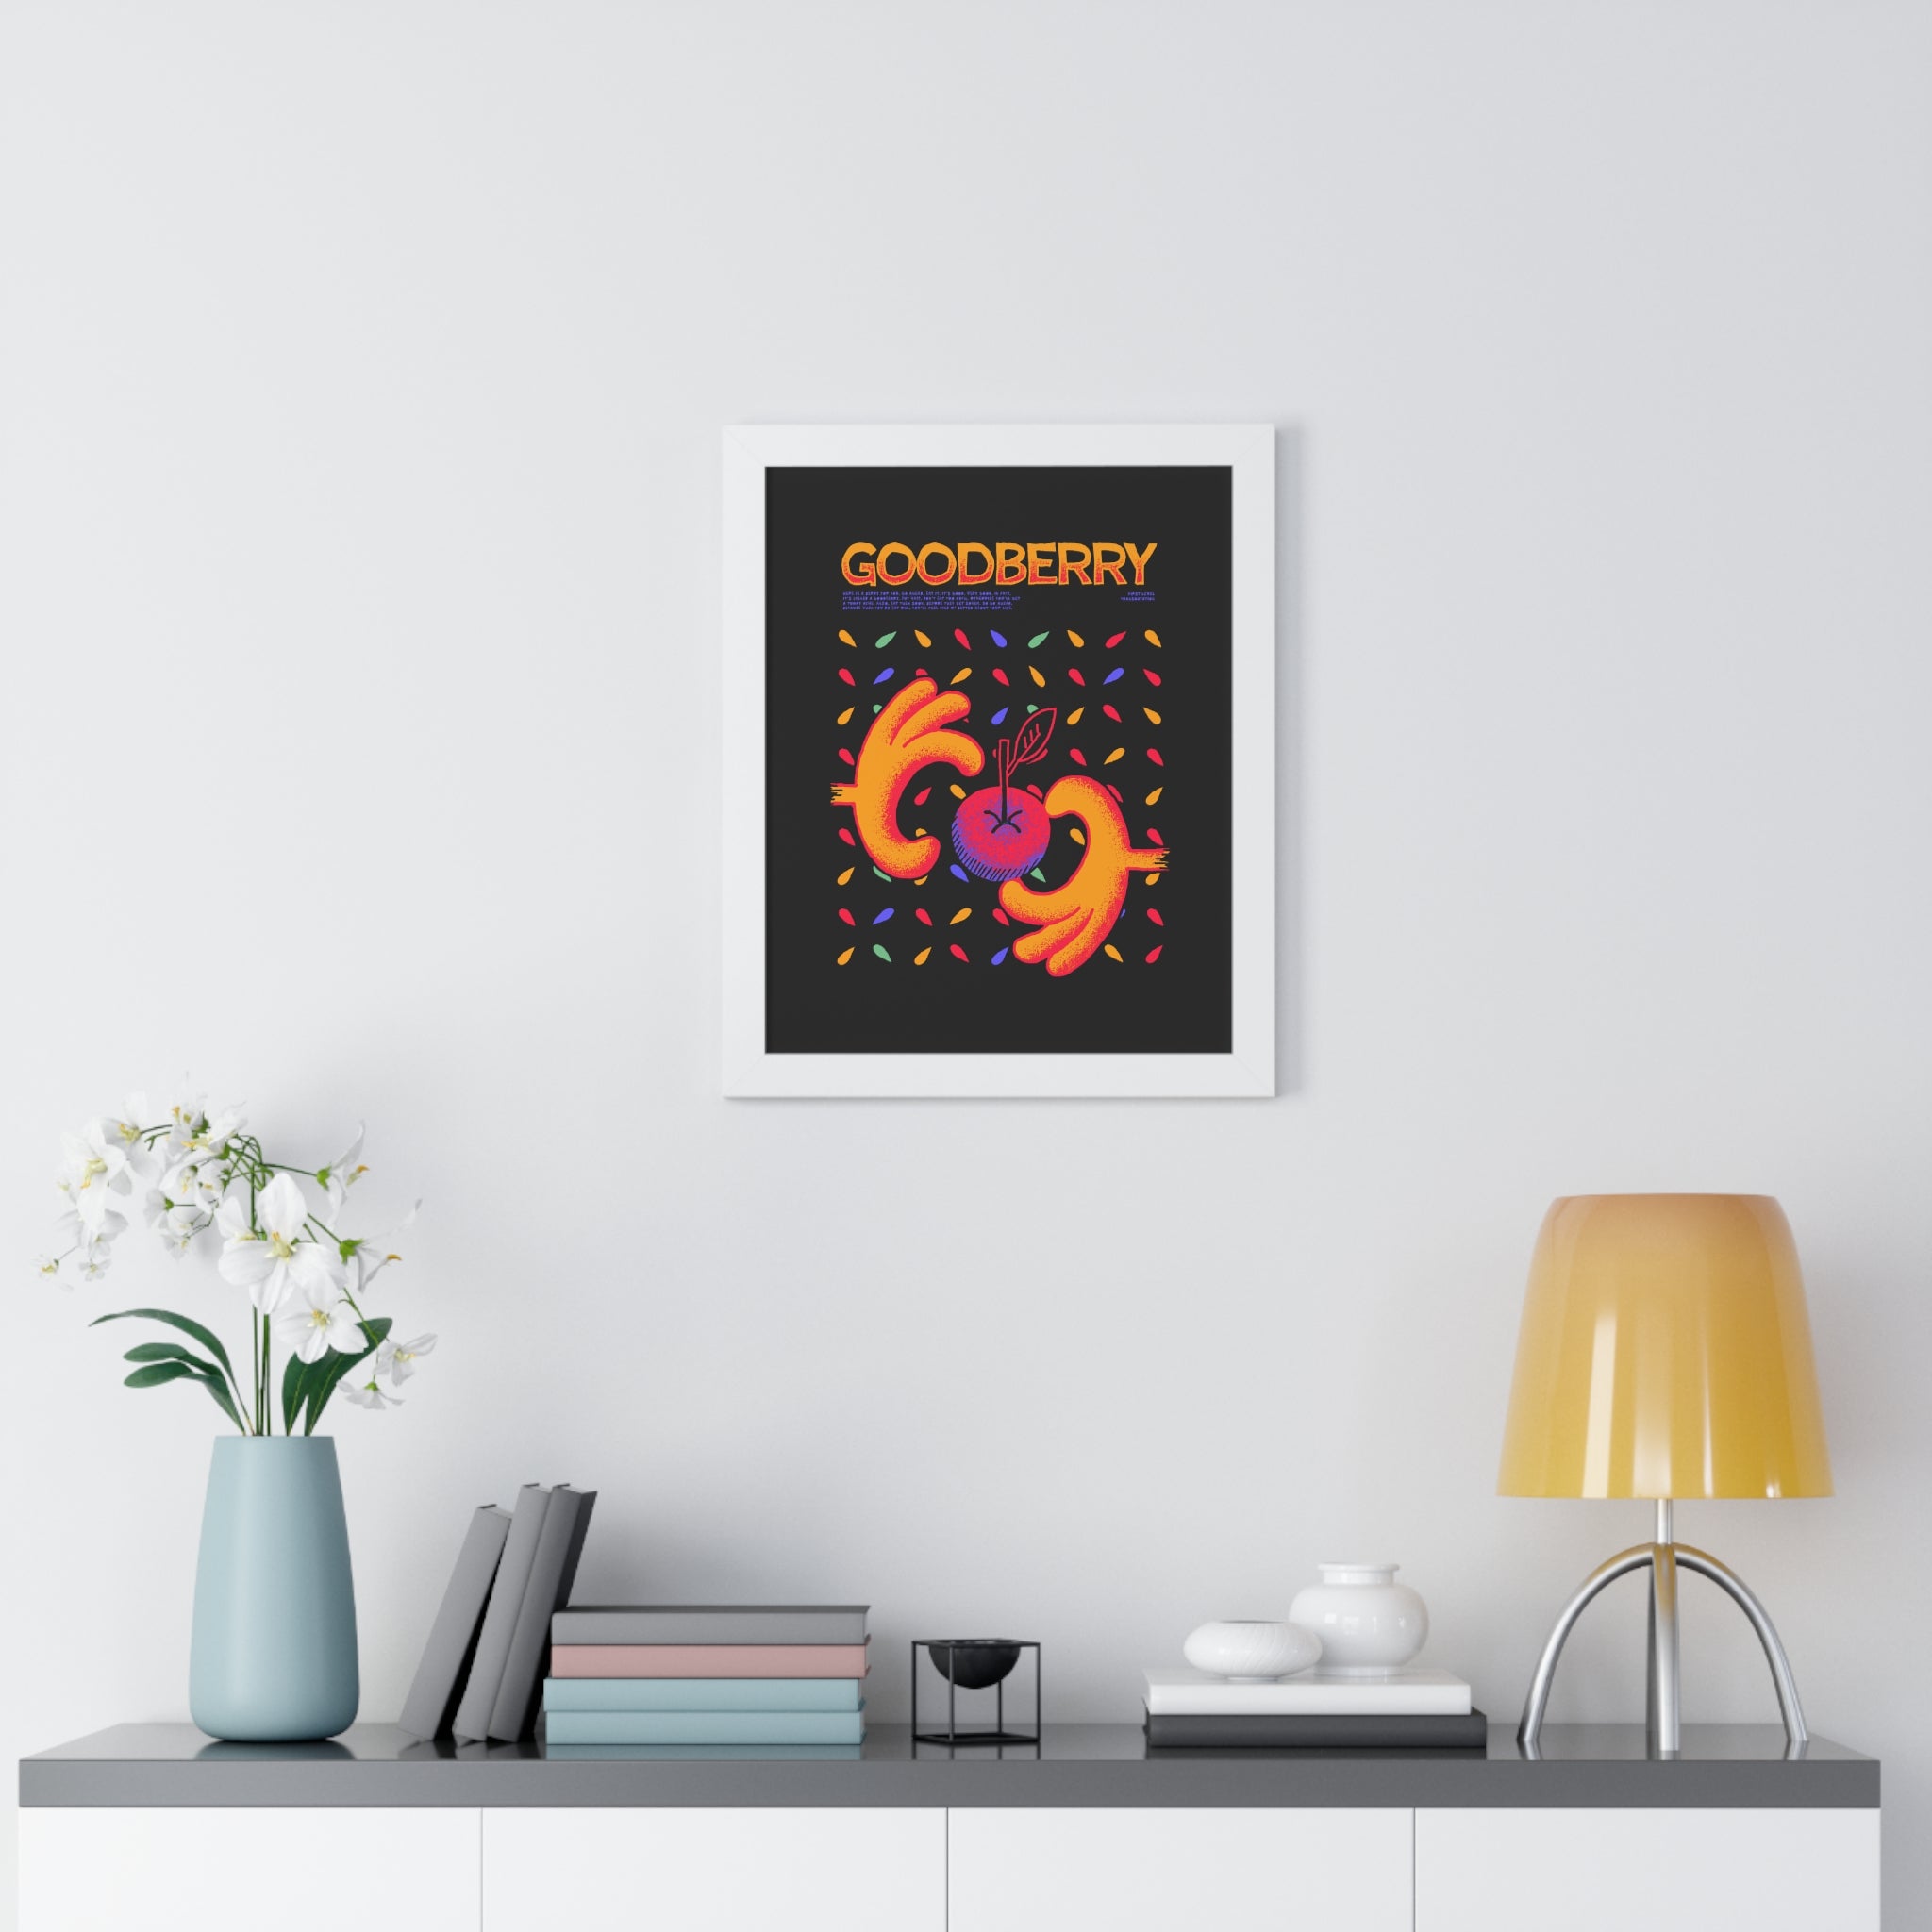 Goodberry | Framed Poster - Framed Poster - Ace of Gnomes - 85100598124068840166